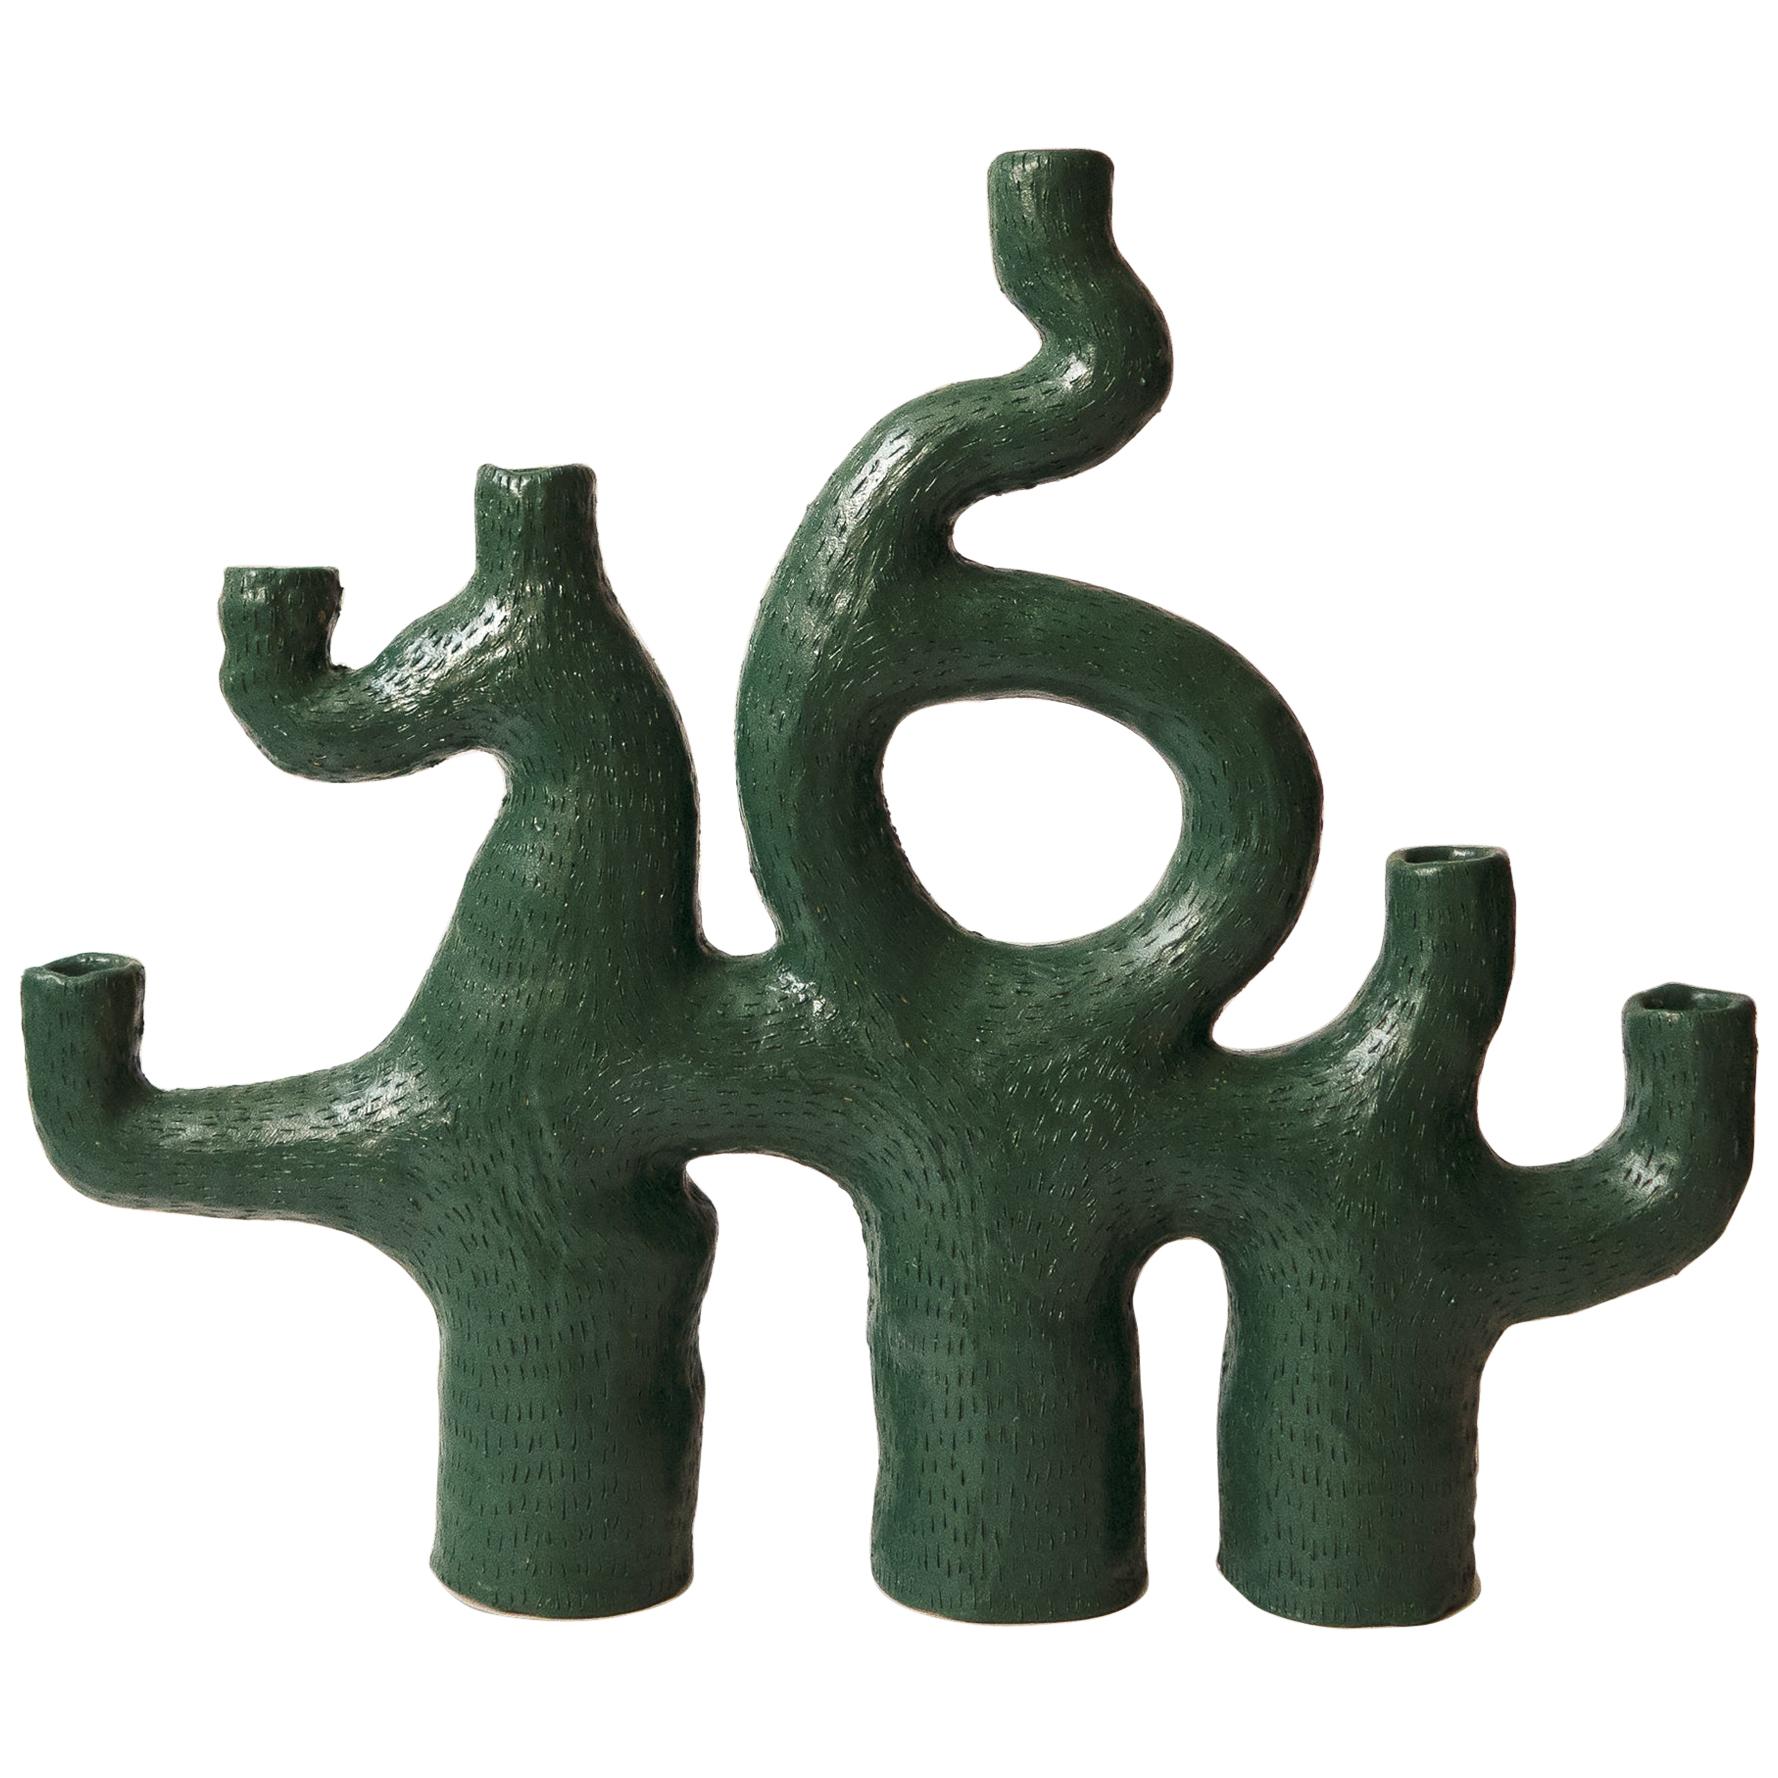 Emerald Sea Candelabra Ceramic "Six Arms Three Legs" by Jan Ernst de Wet For Sale